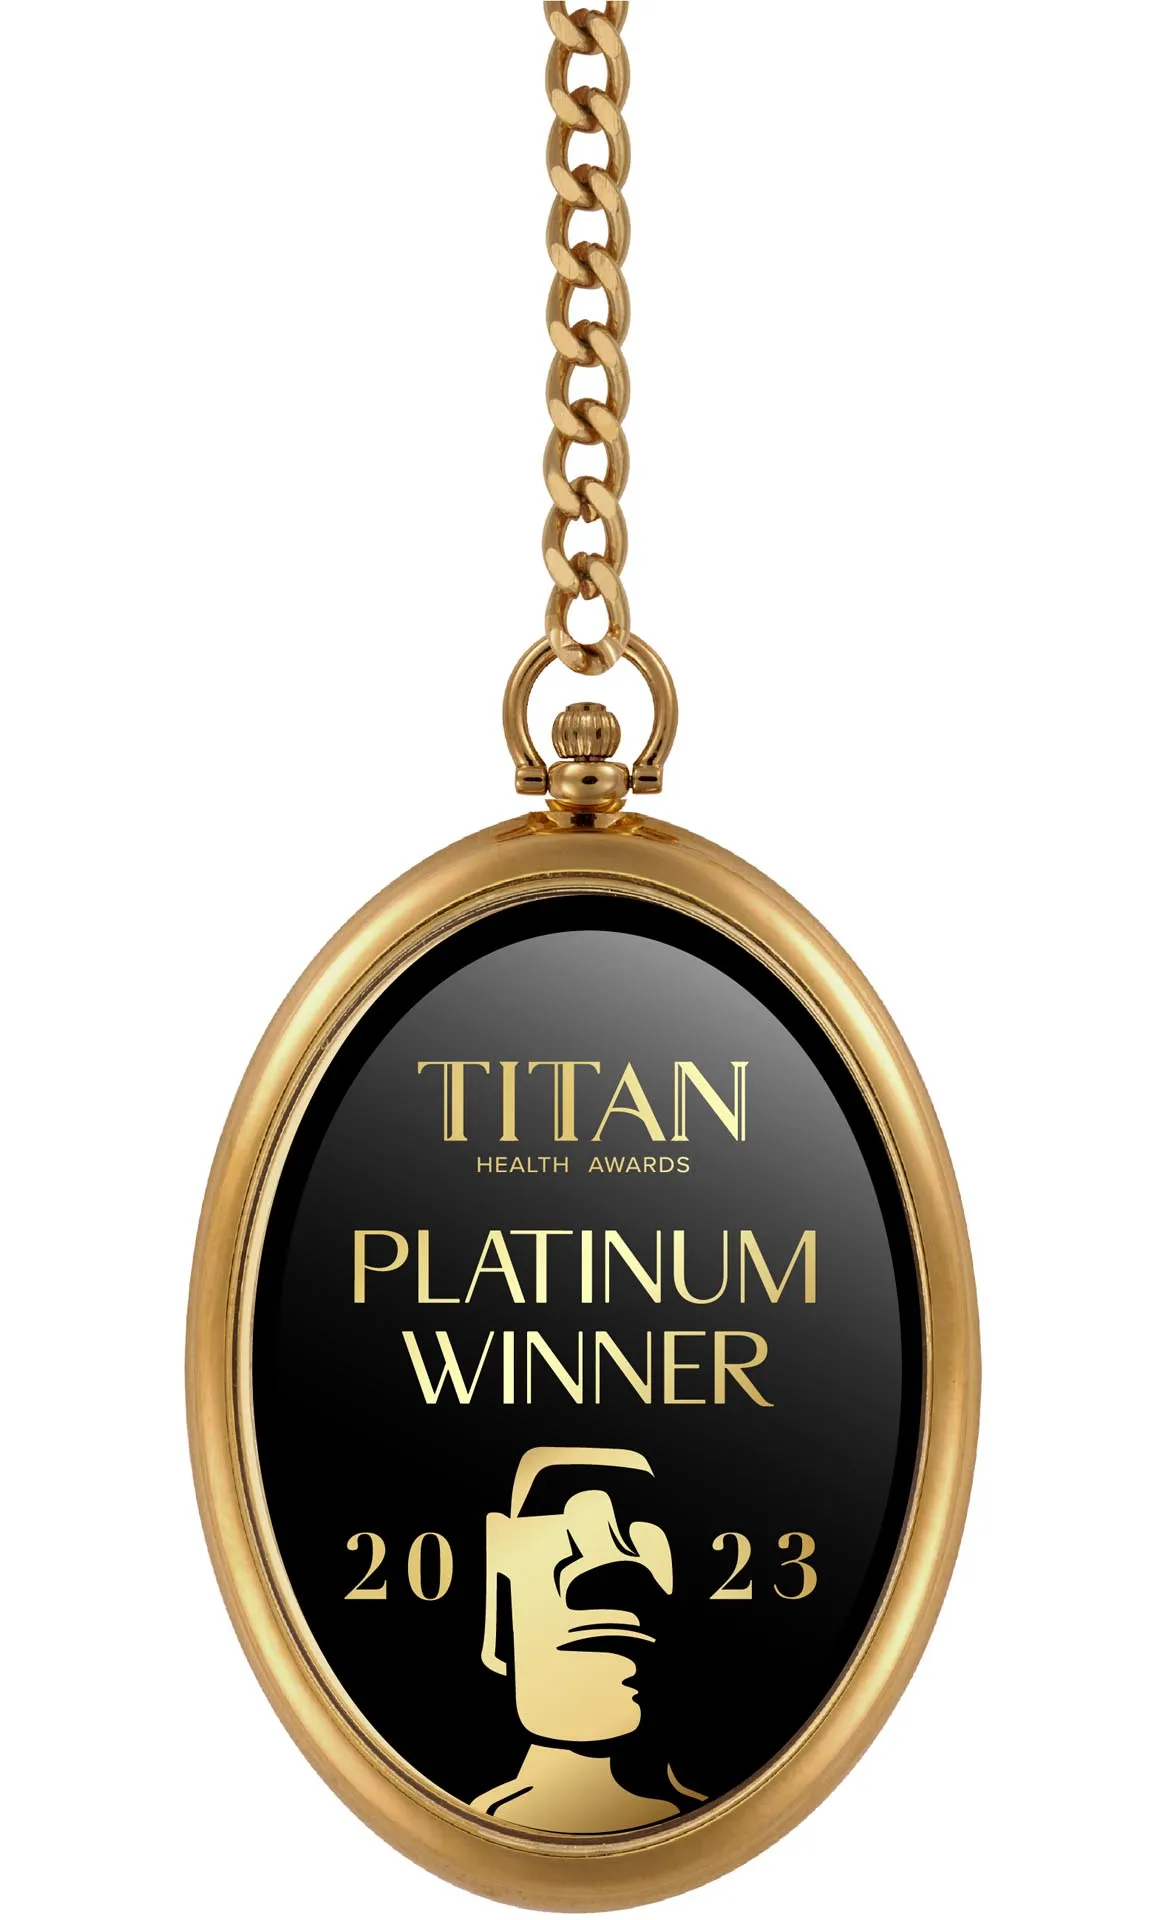 5WPR Awarded Platinum TITAN Health Award, in Provider & Services - Health Advice Hero category